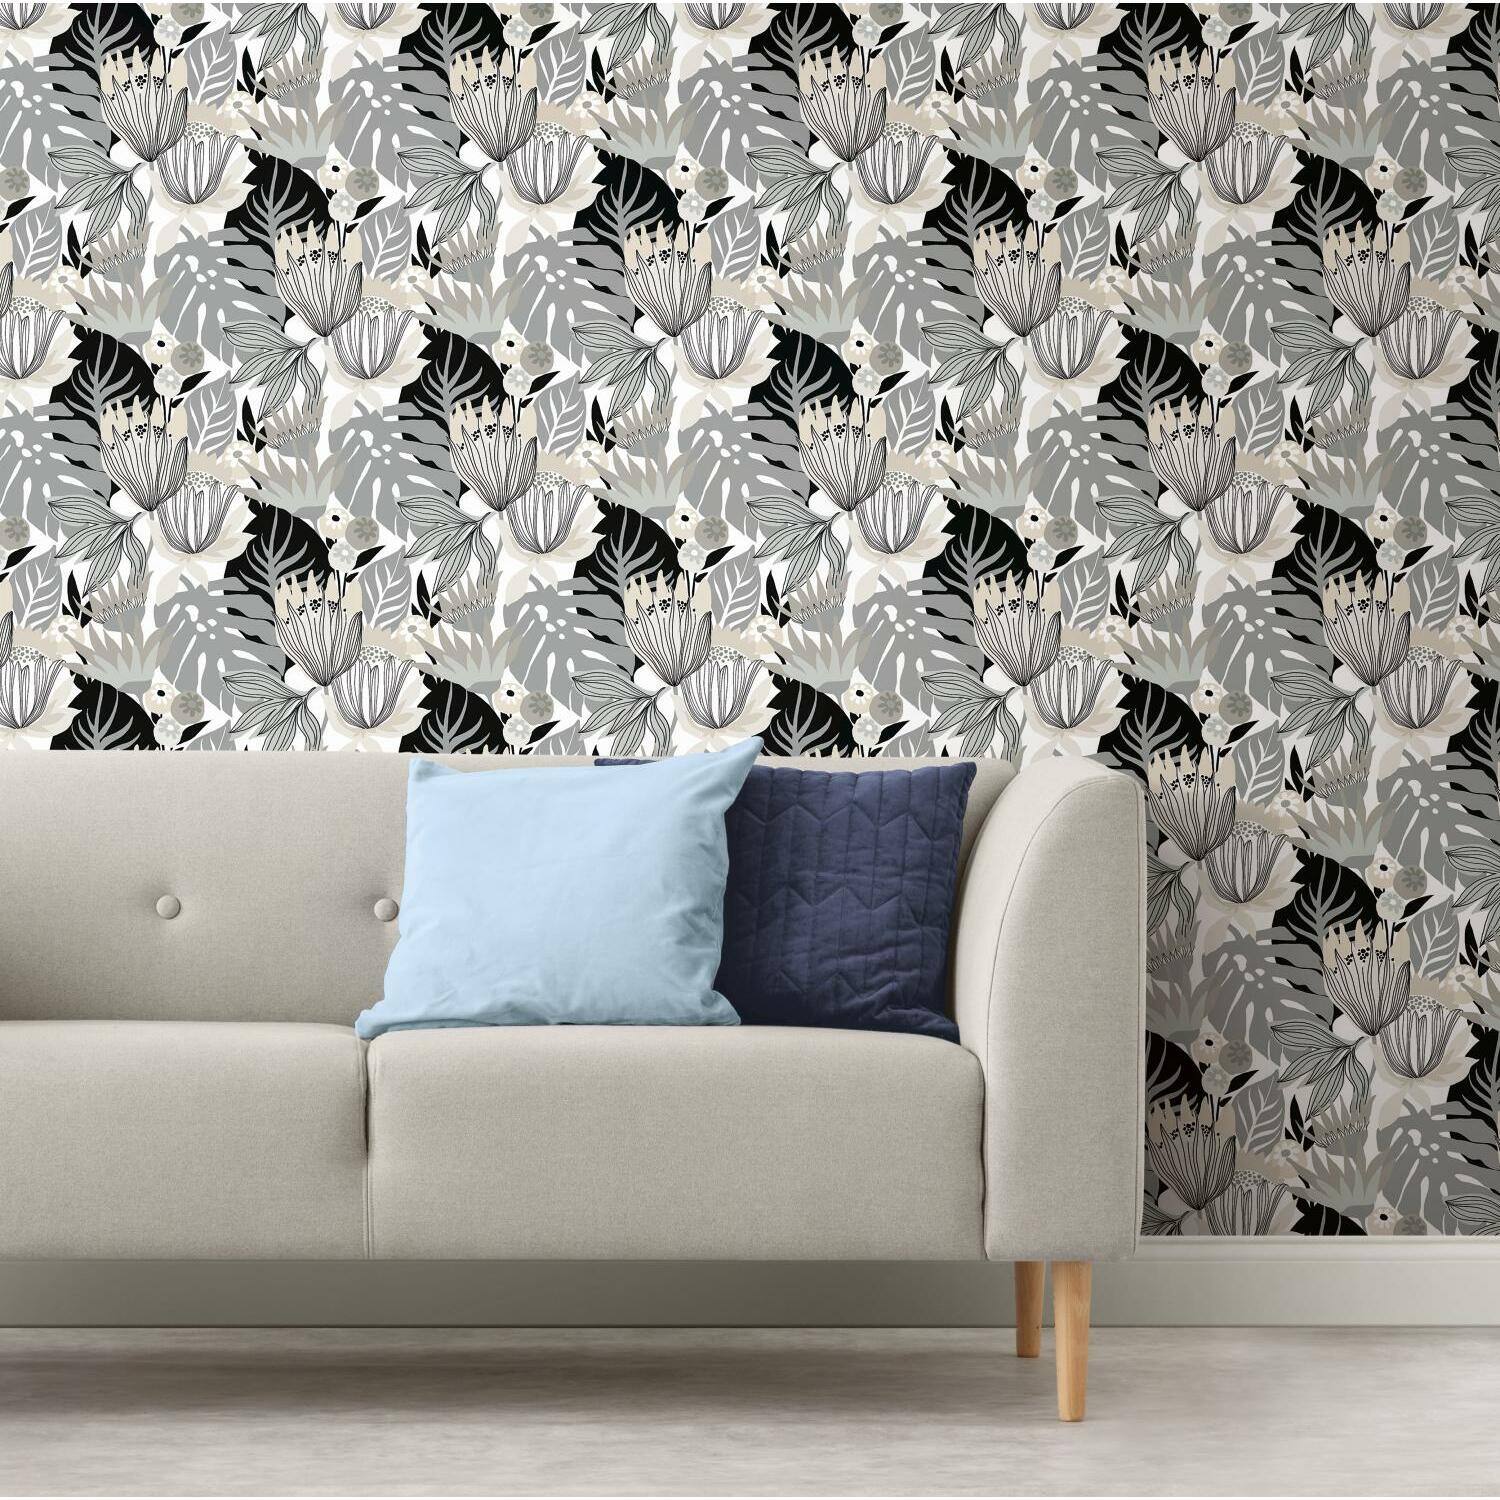 RoomMates Retro Tropical Leaves Peel &#x26; Stick Wallpaper